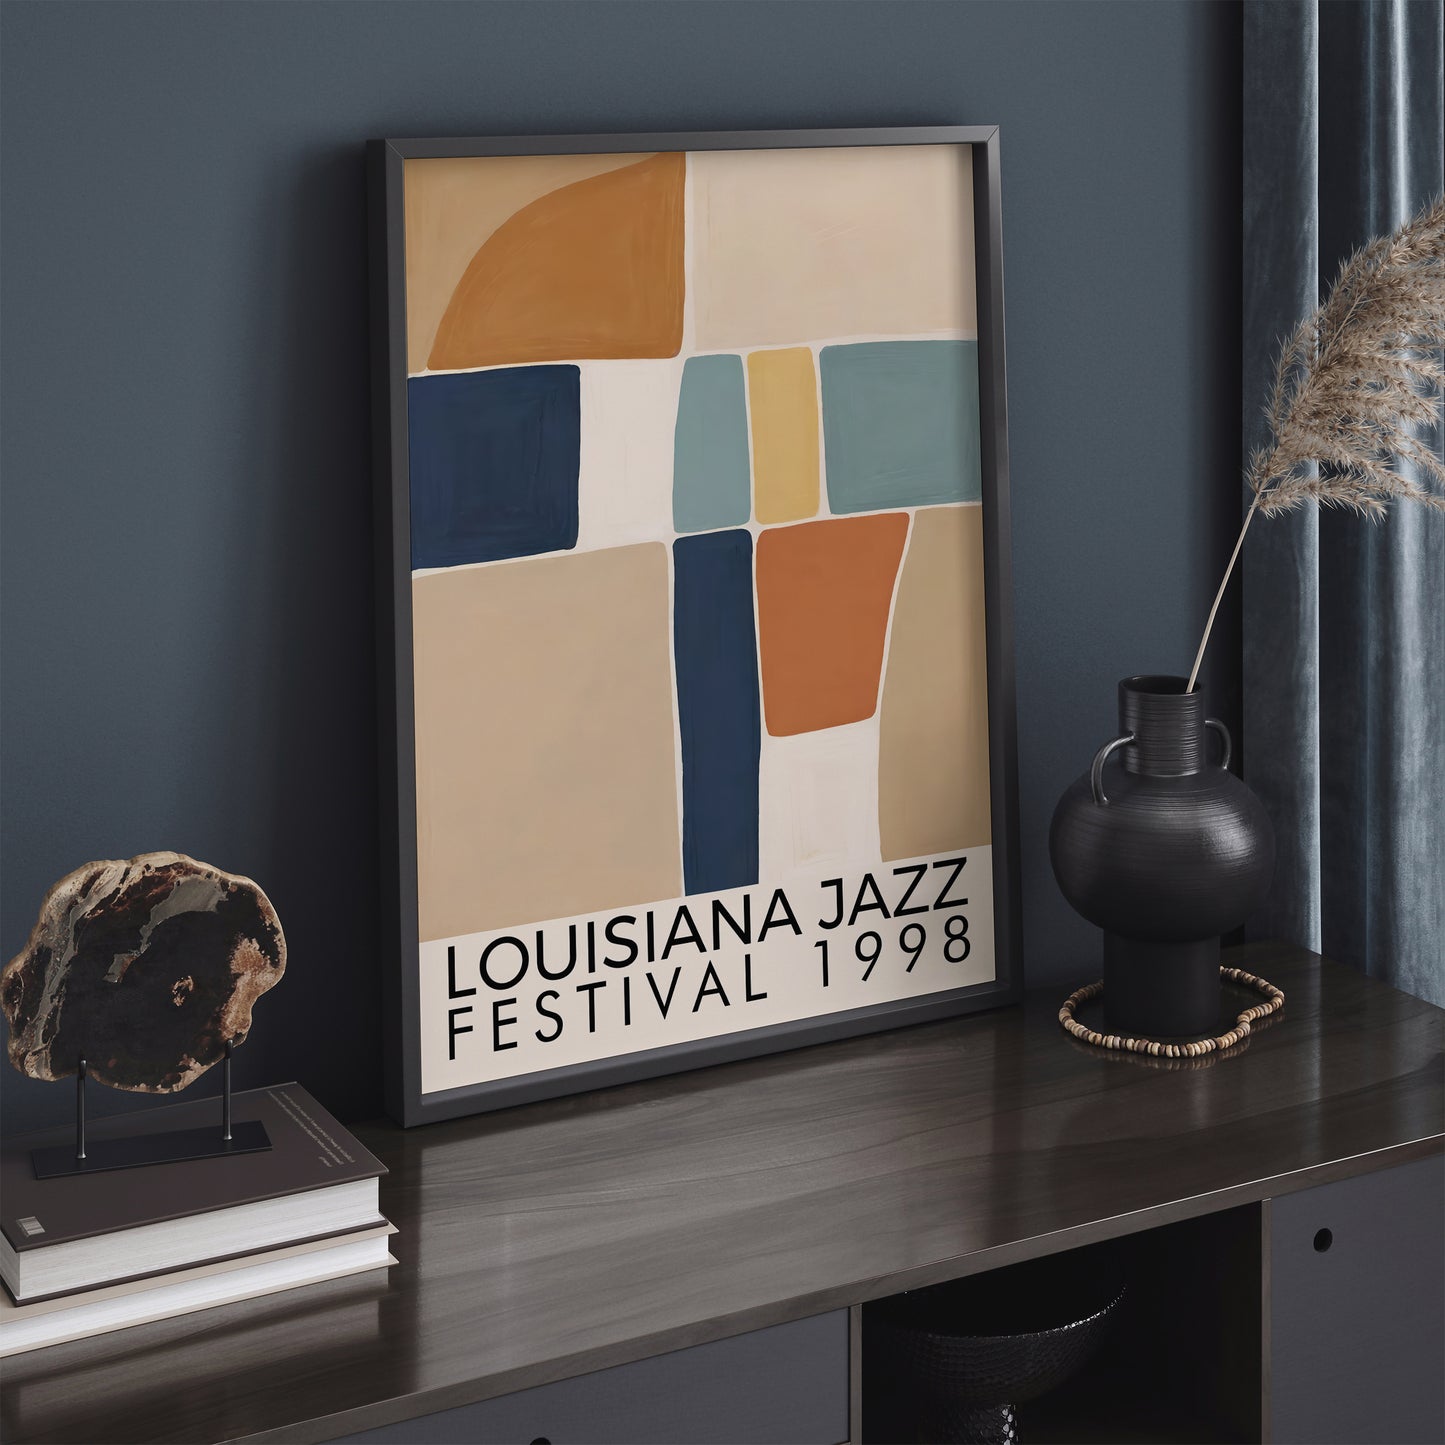 Jazz Music Festival in Louisiana Poster